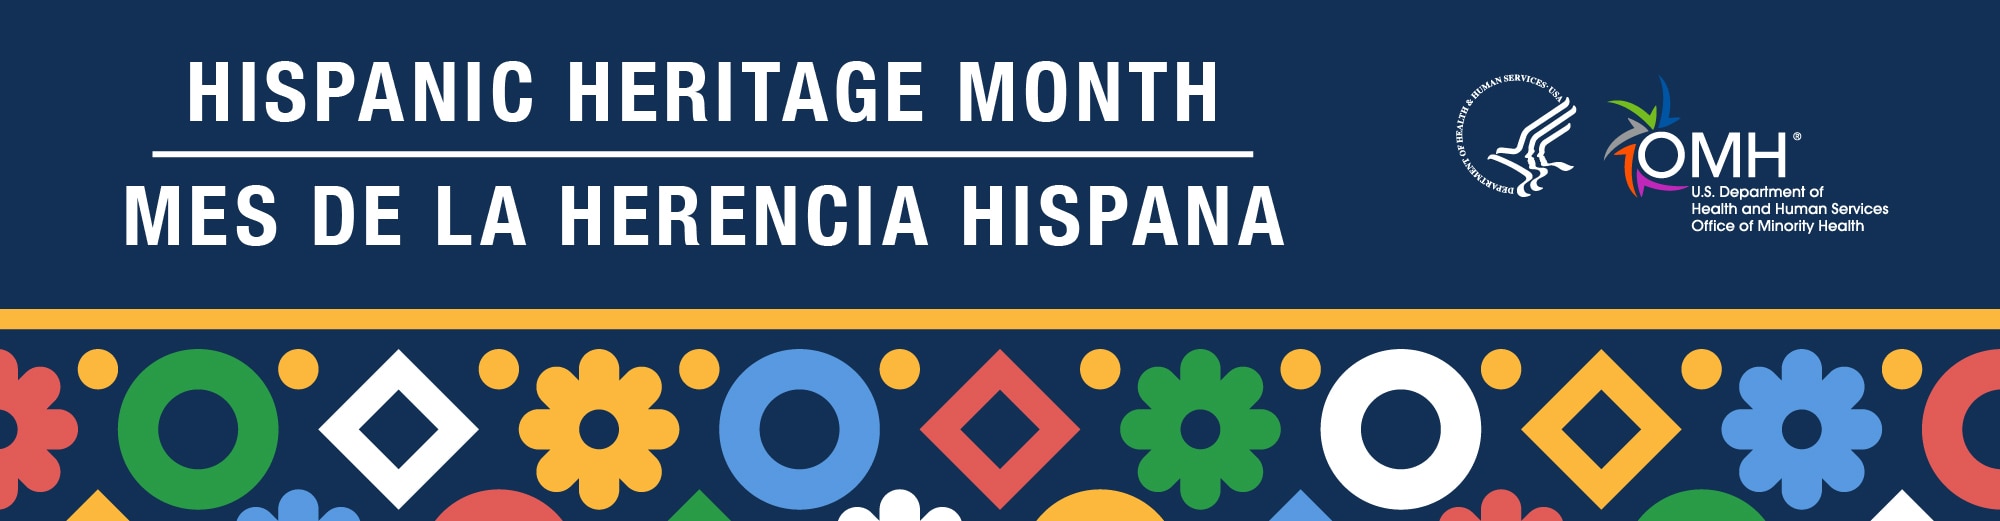 Abstract Hispanic Heritage Month header graphic